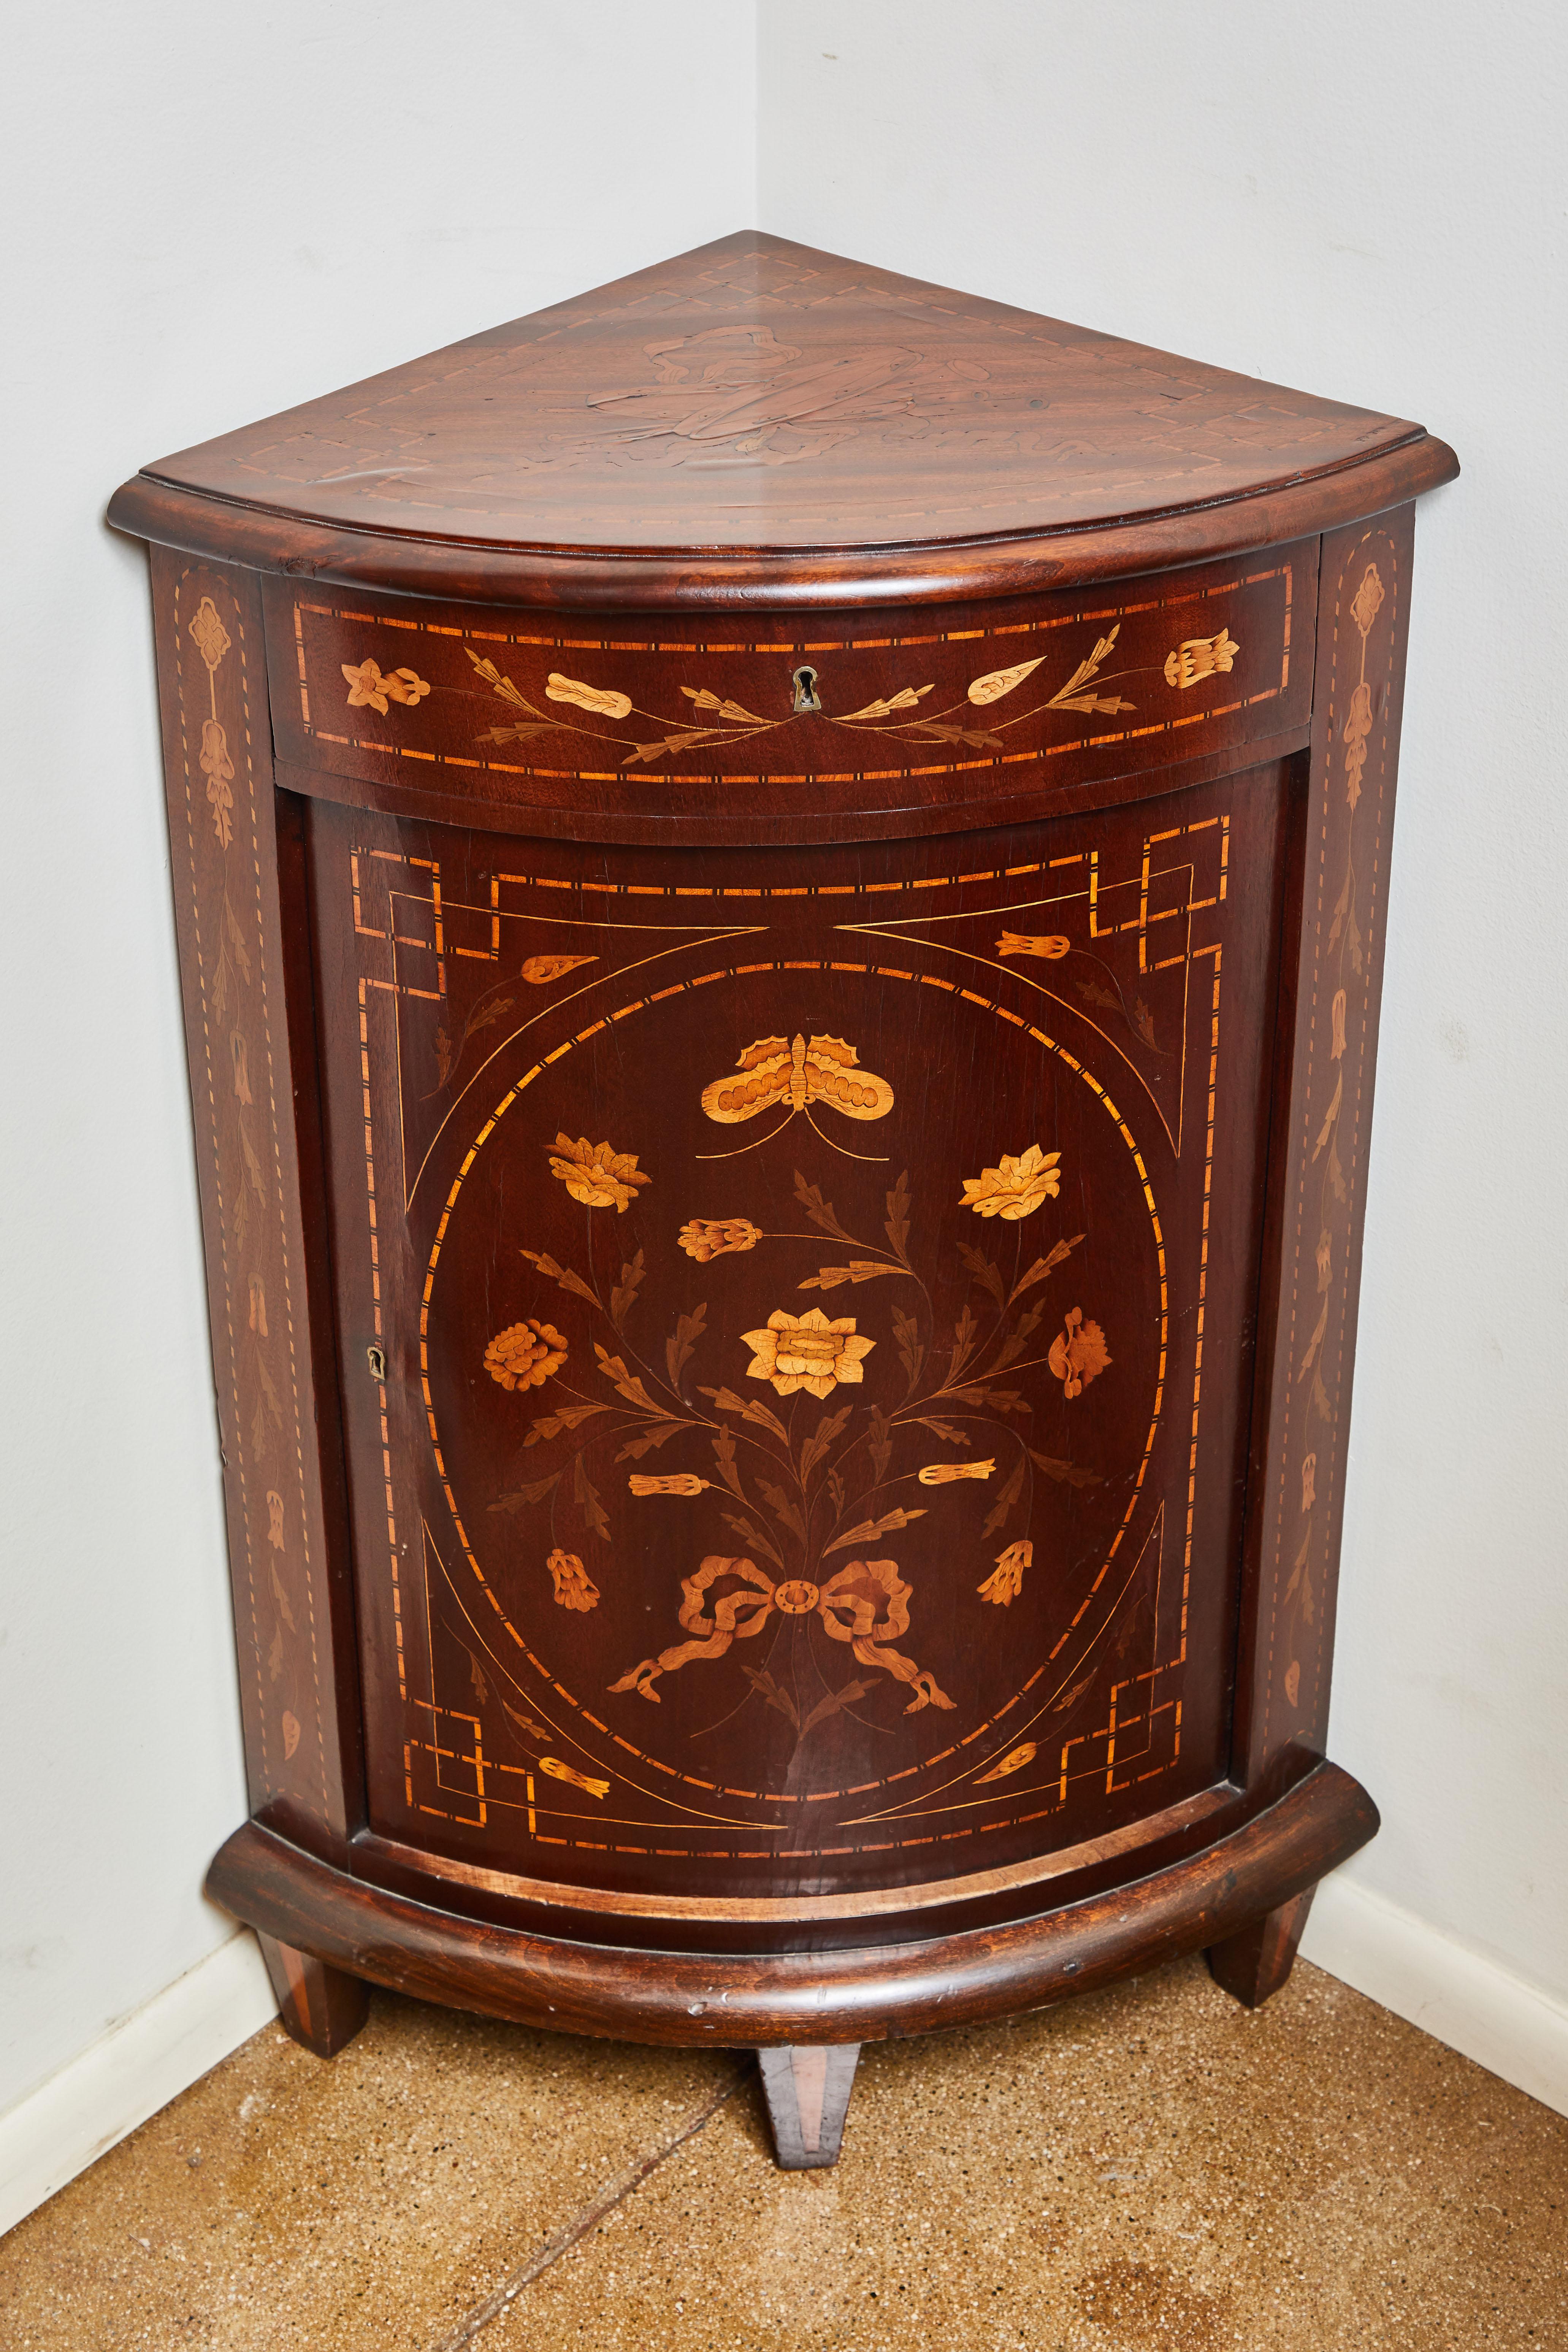 18th century inlaid corner piece
Exquisite piece of furniture with beautiful inlays of various veneers.